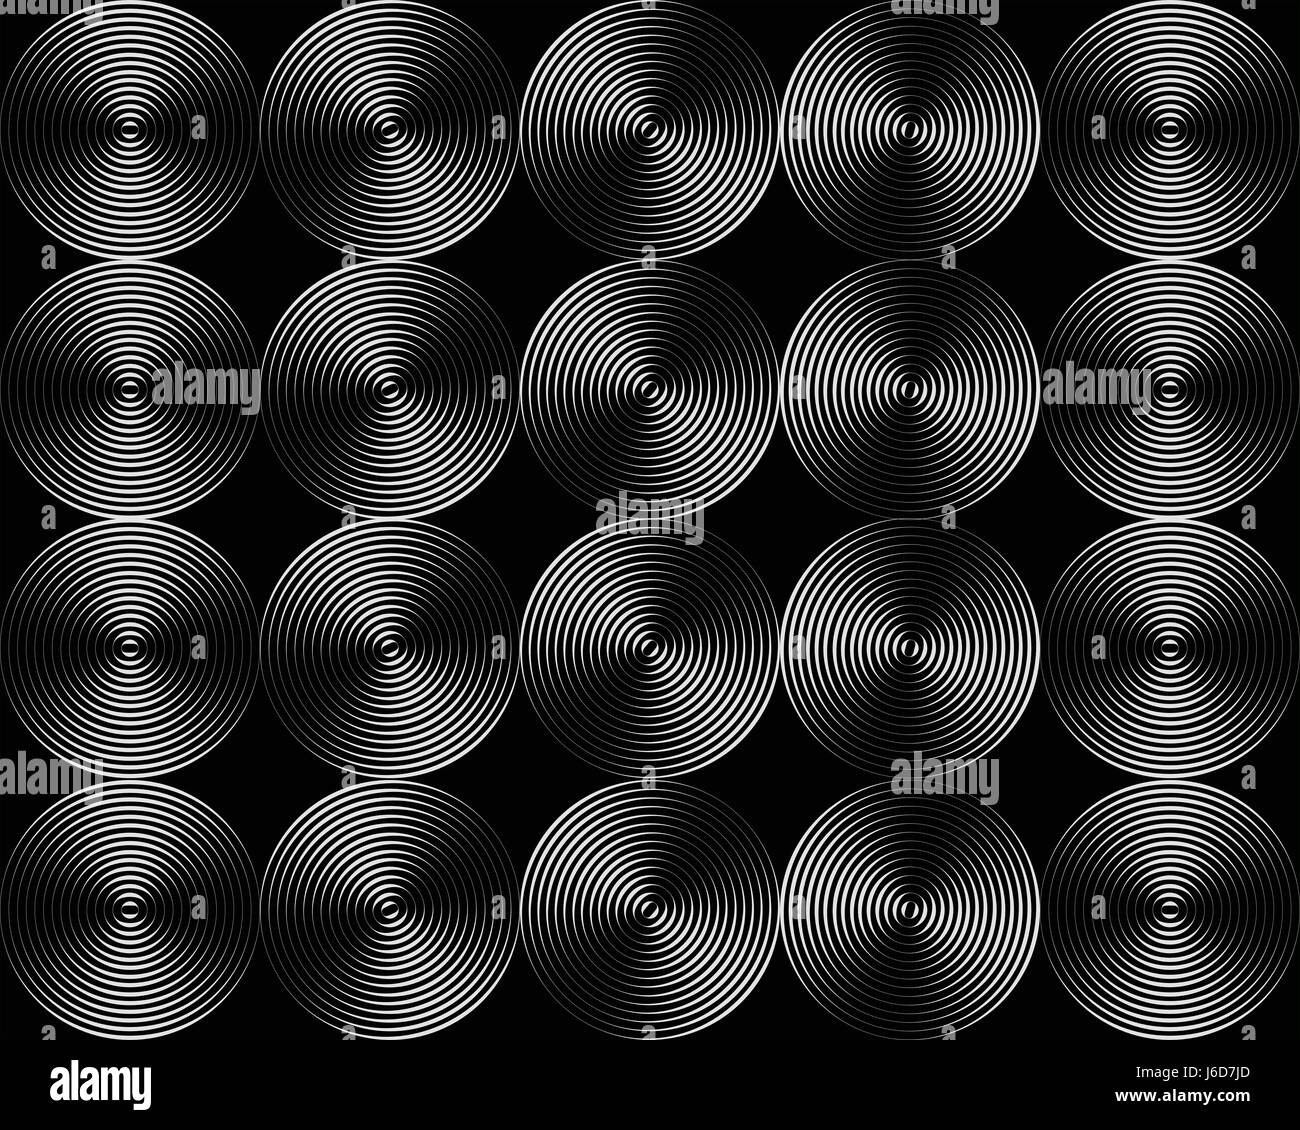 ring black swarthy jetblack deep black coloured illustration shine circle Stock Photo